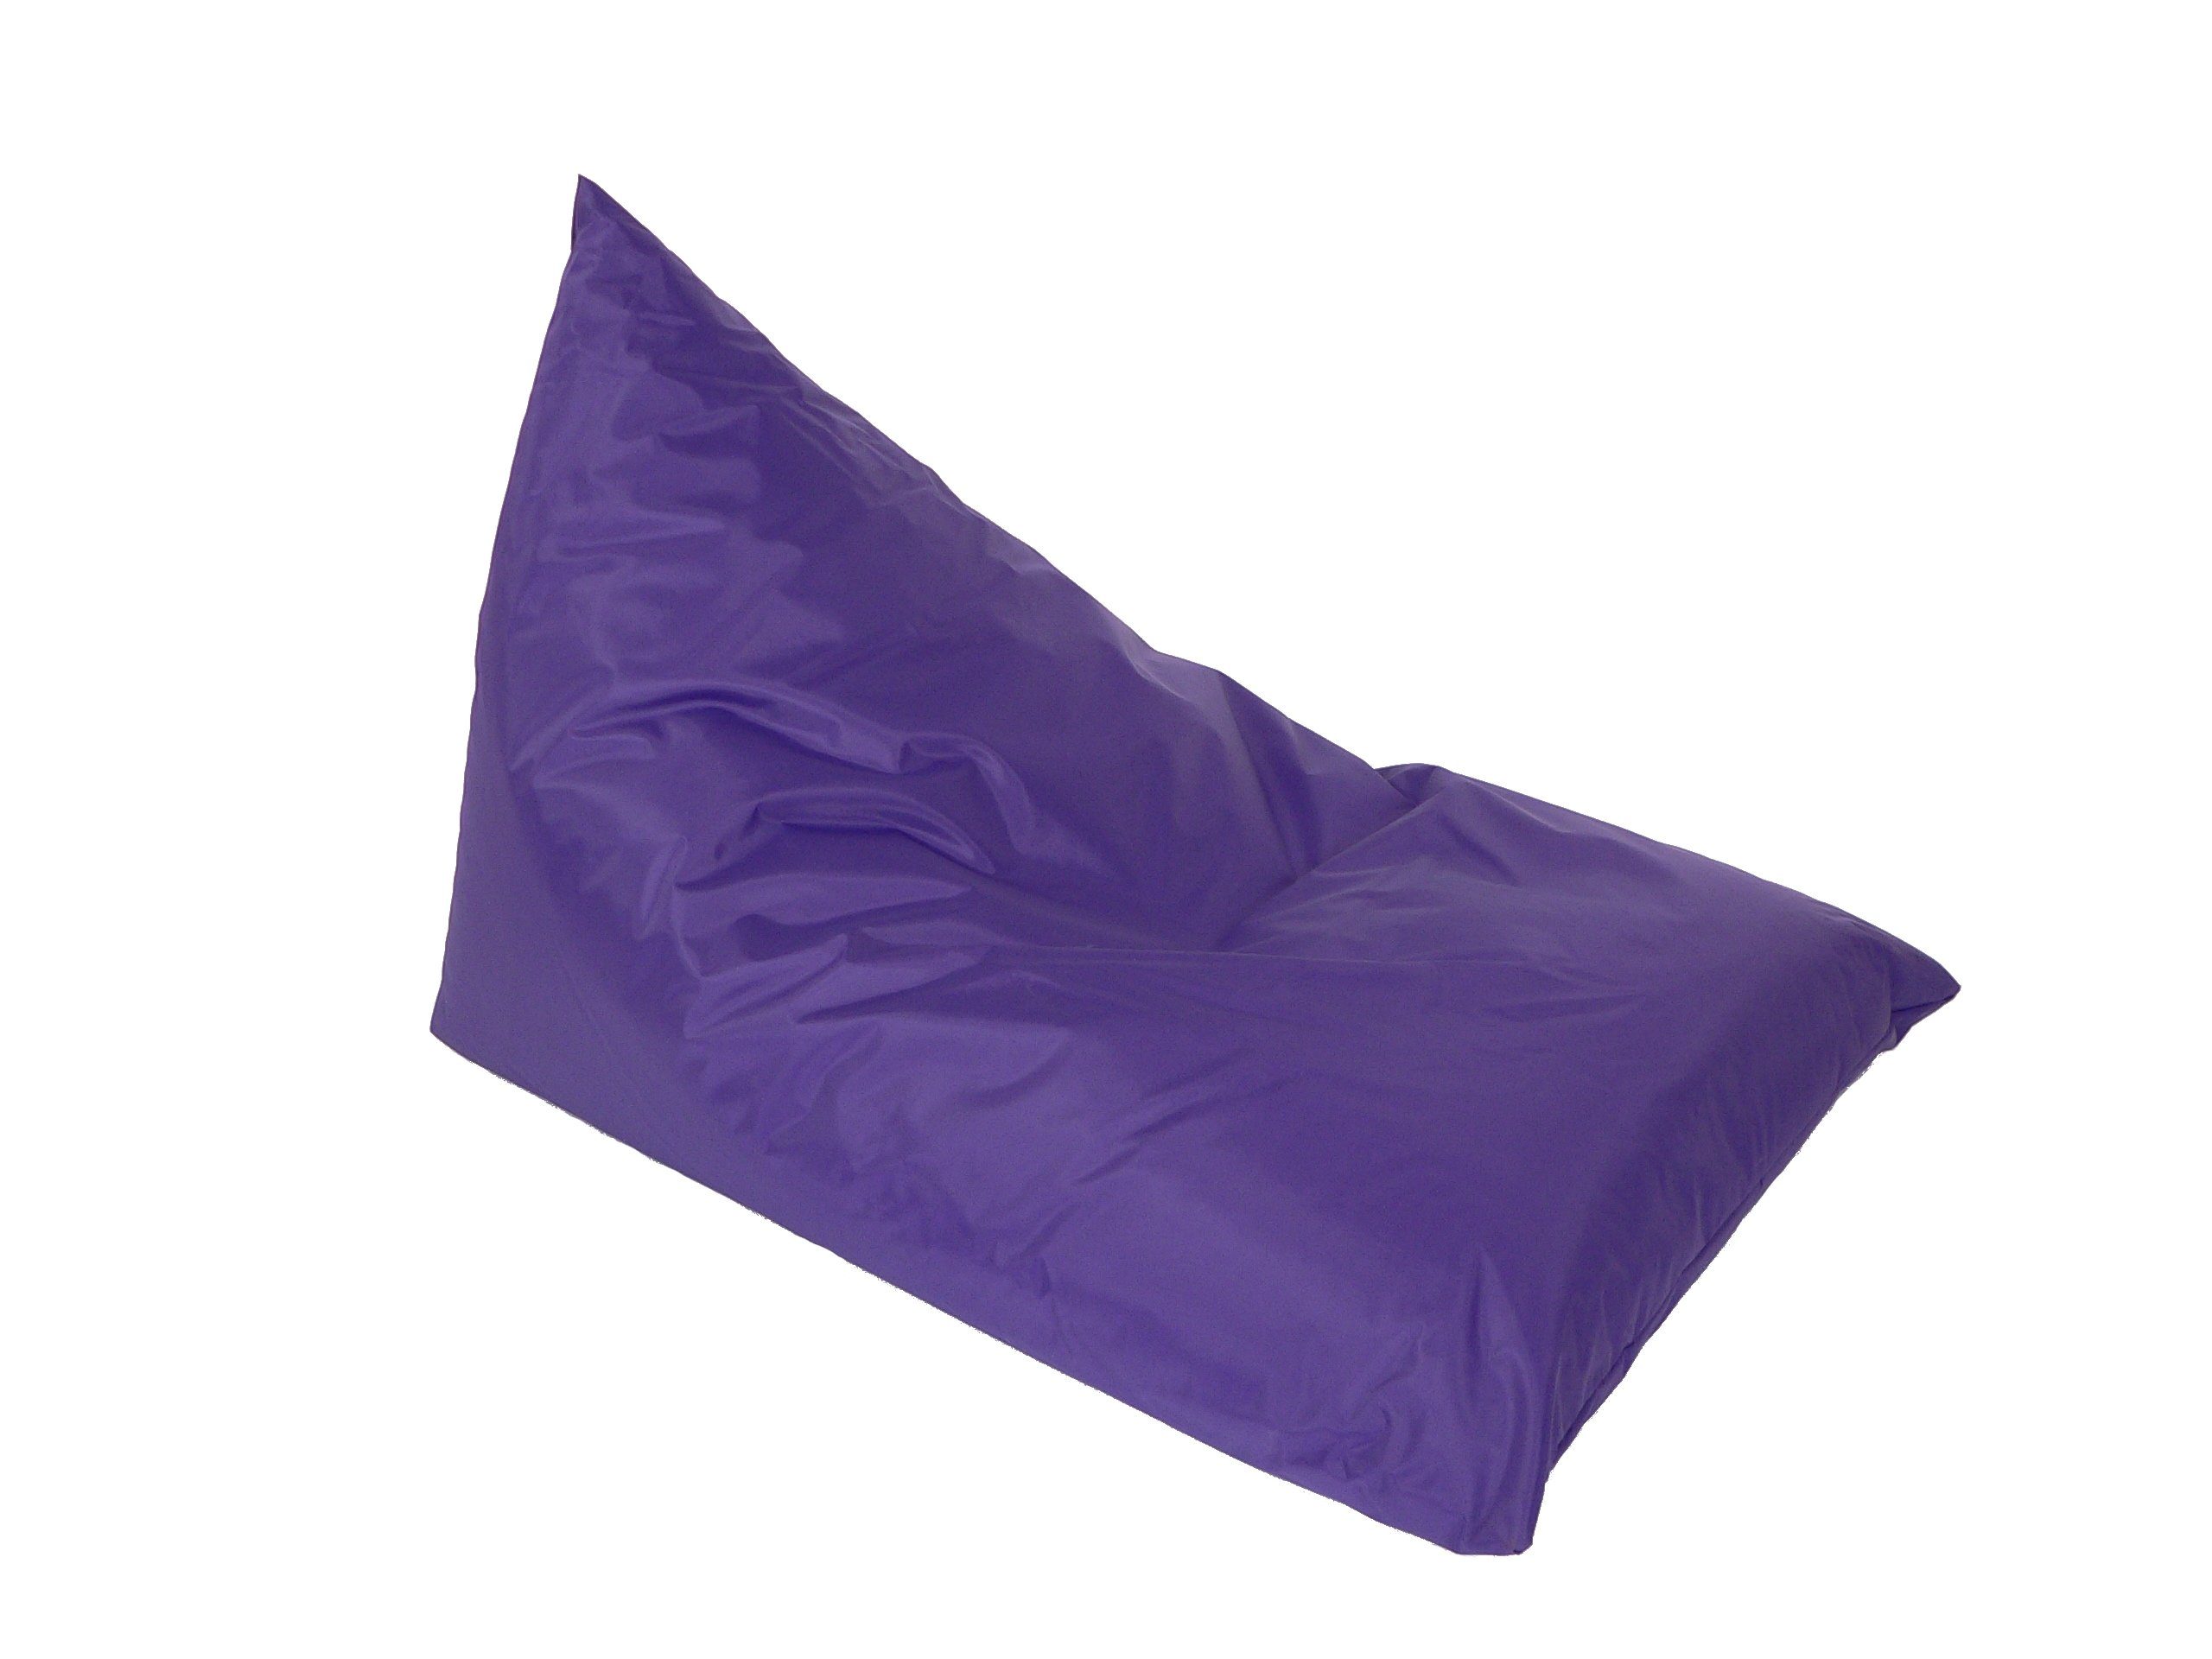 Licardo Sitzsack Sitzsack Chillkissen Nylon purple 100/140 cm (1 St)